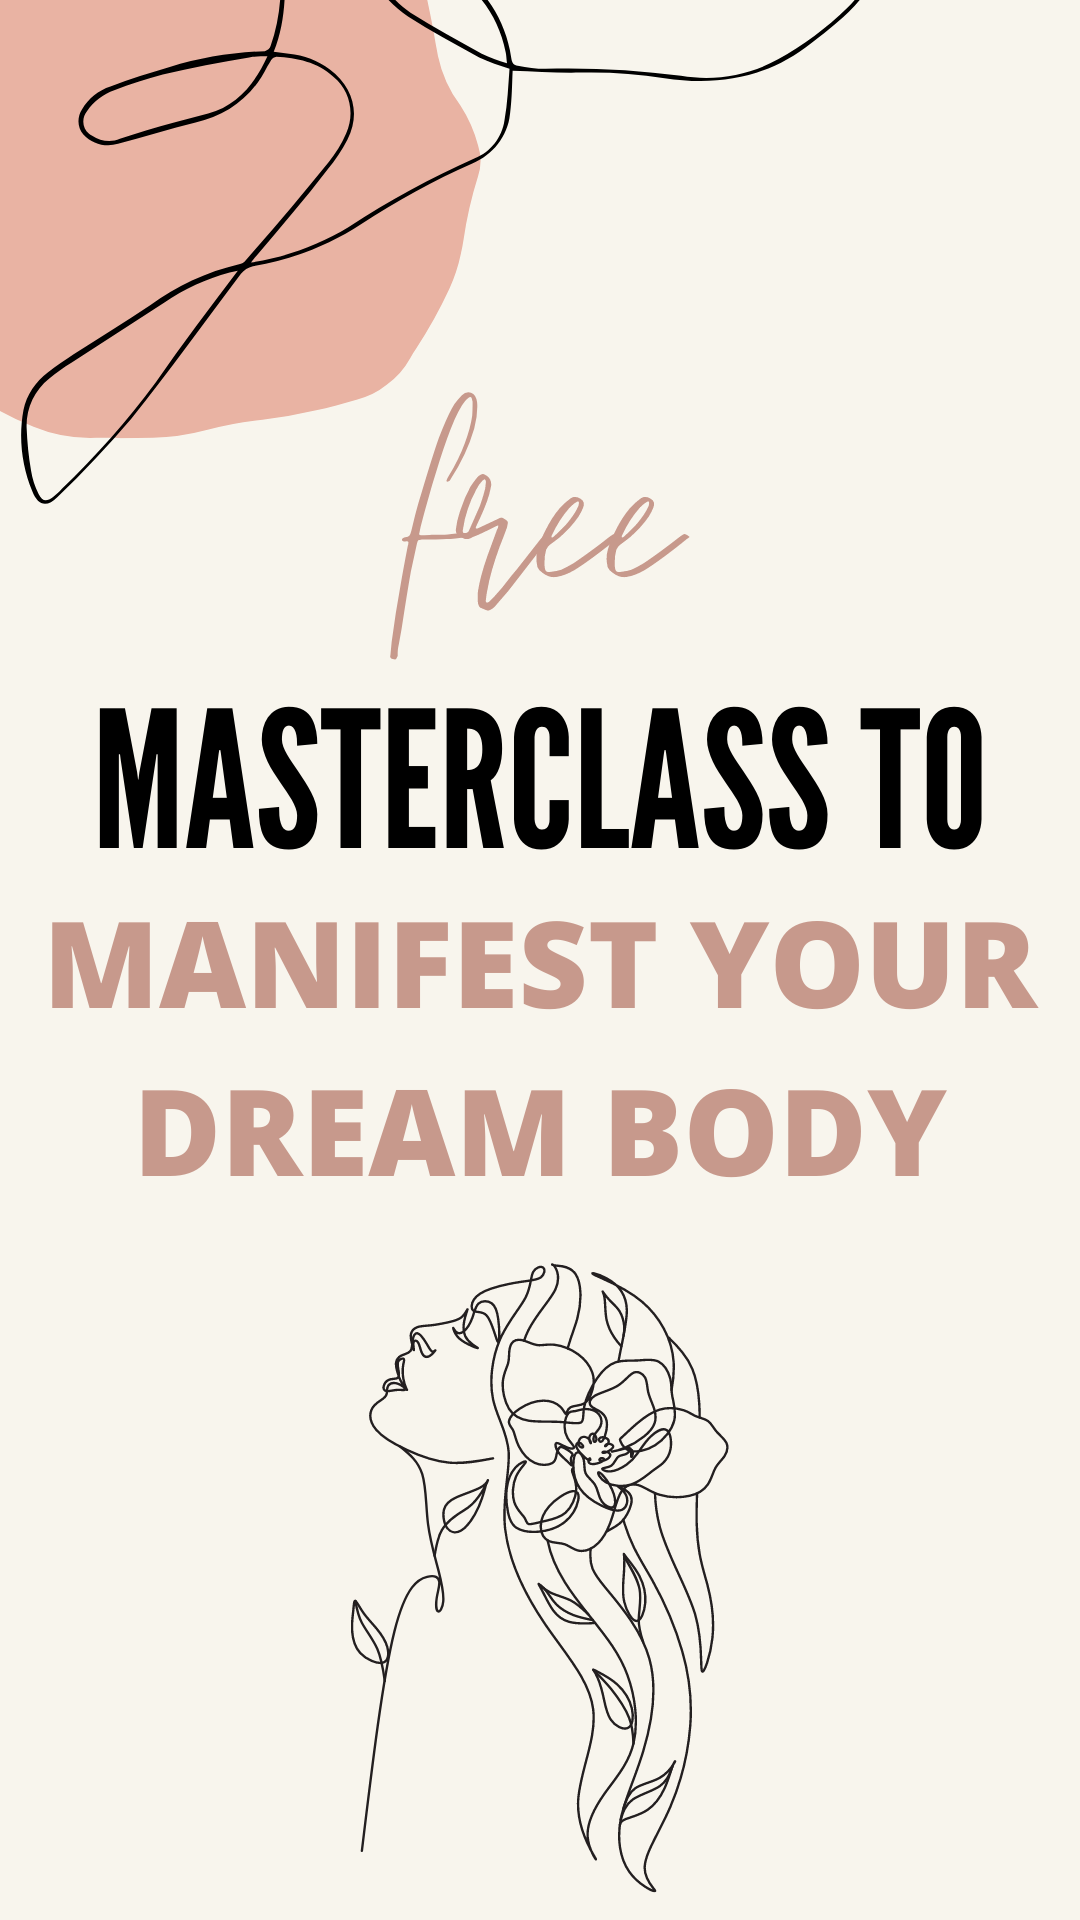 Dream Body Masterclass.png